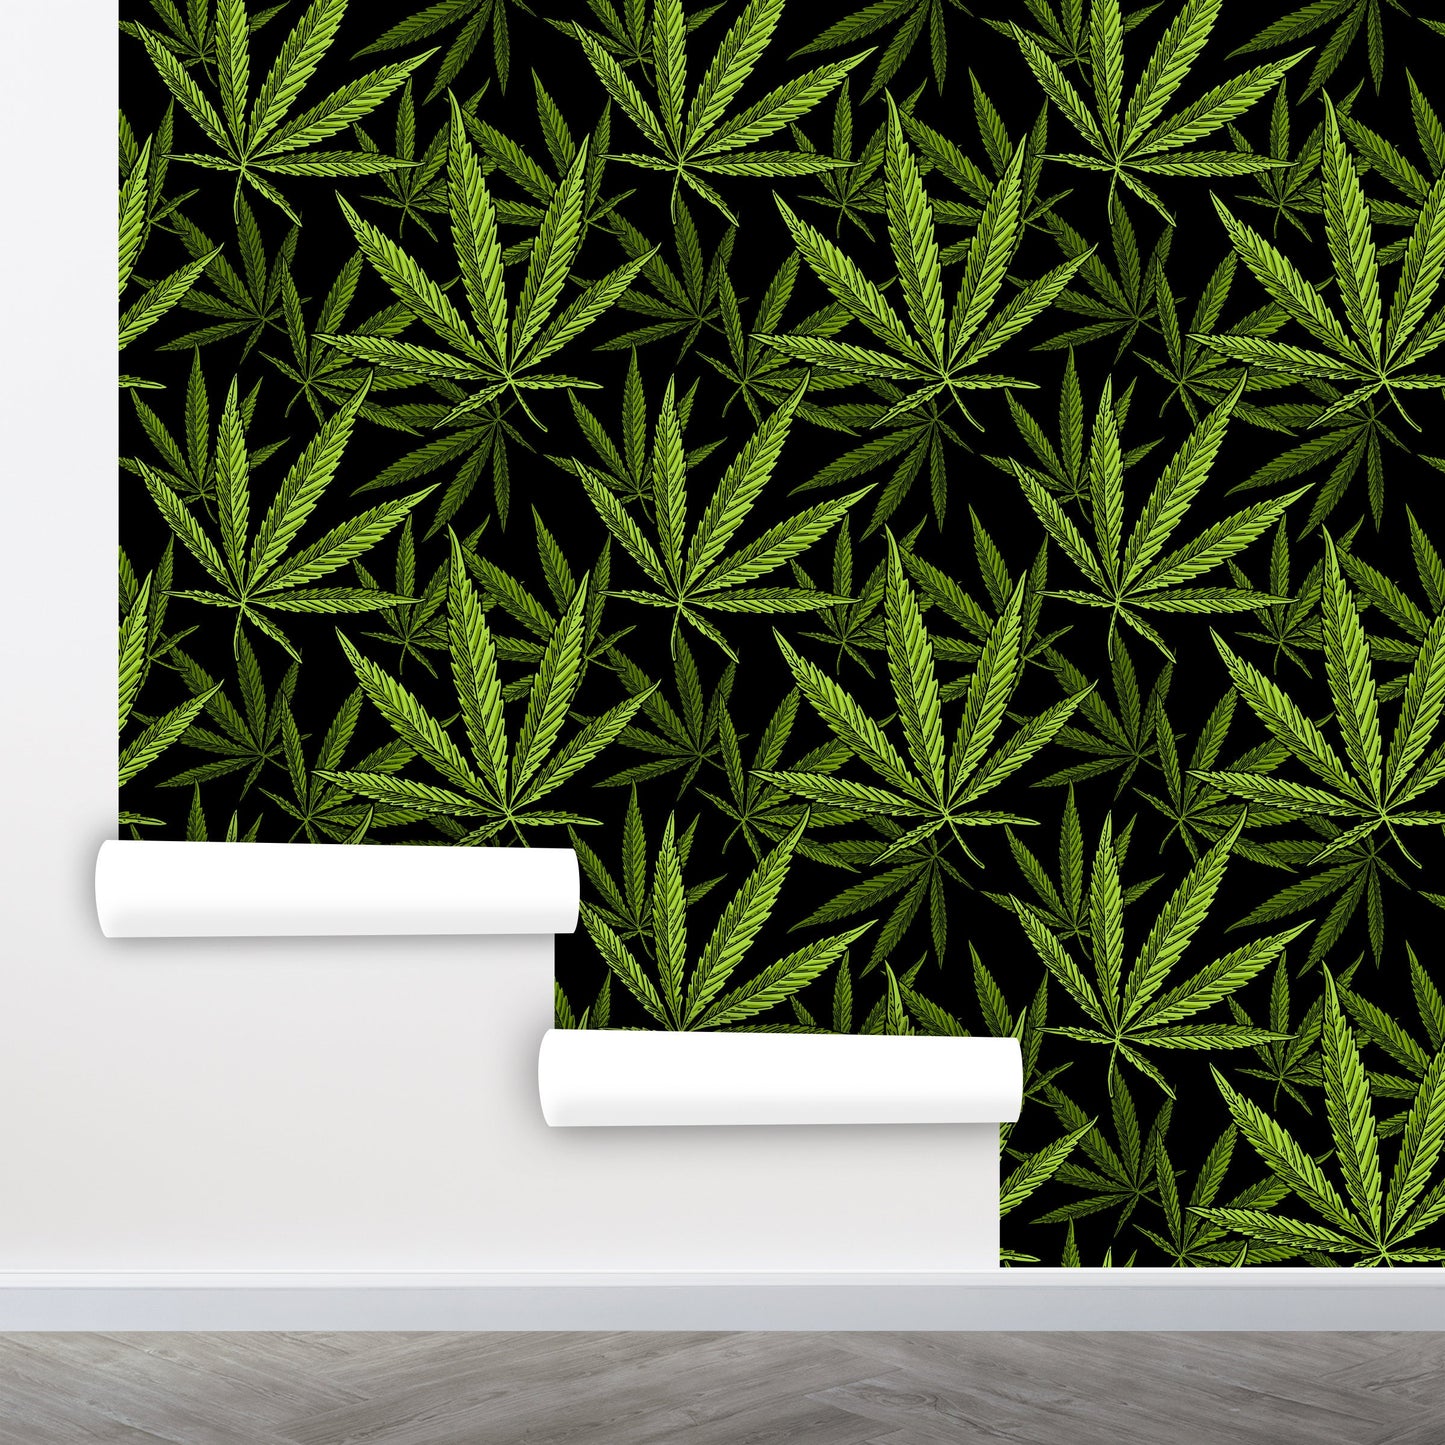 Marijuana Wallpaper, Hemp Wallpaper Peel and Stick, Exotic Wallpaper, Green Leaf Wallpaper, Botanical Wallpaper, Removable Wall Paper